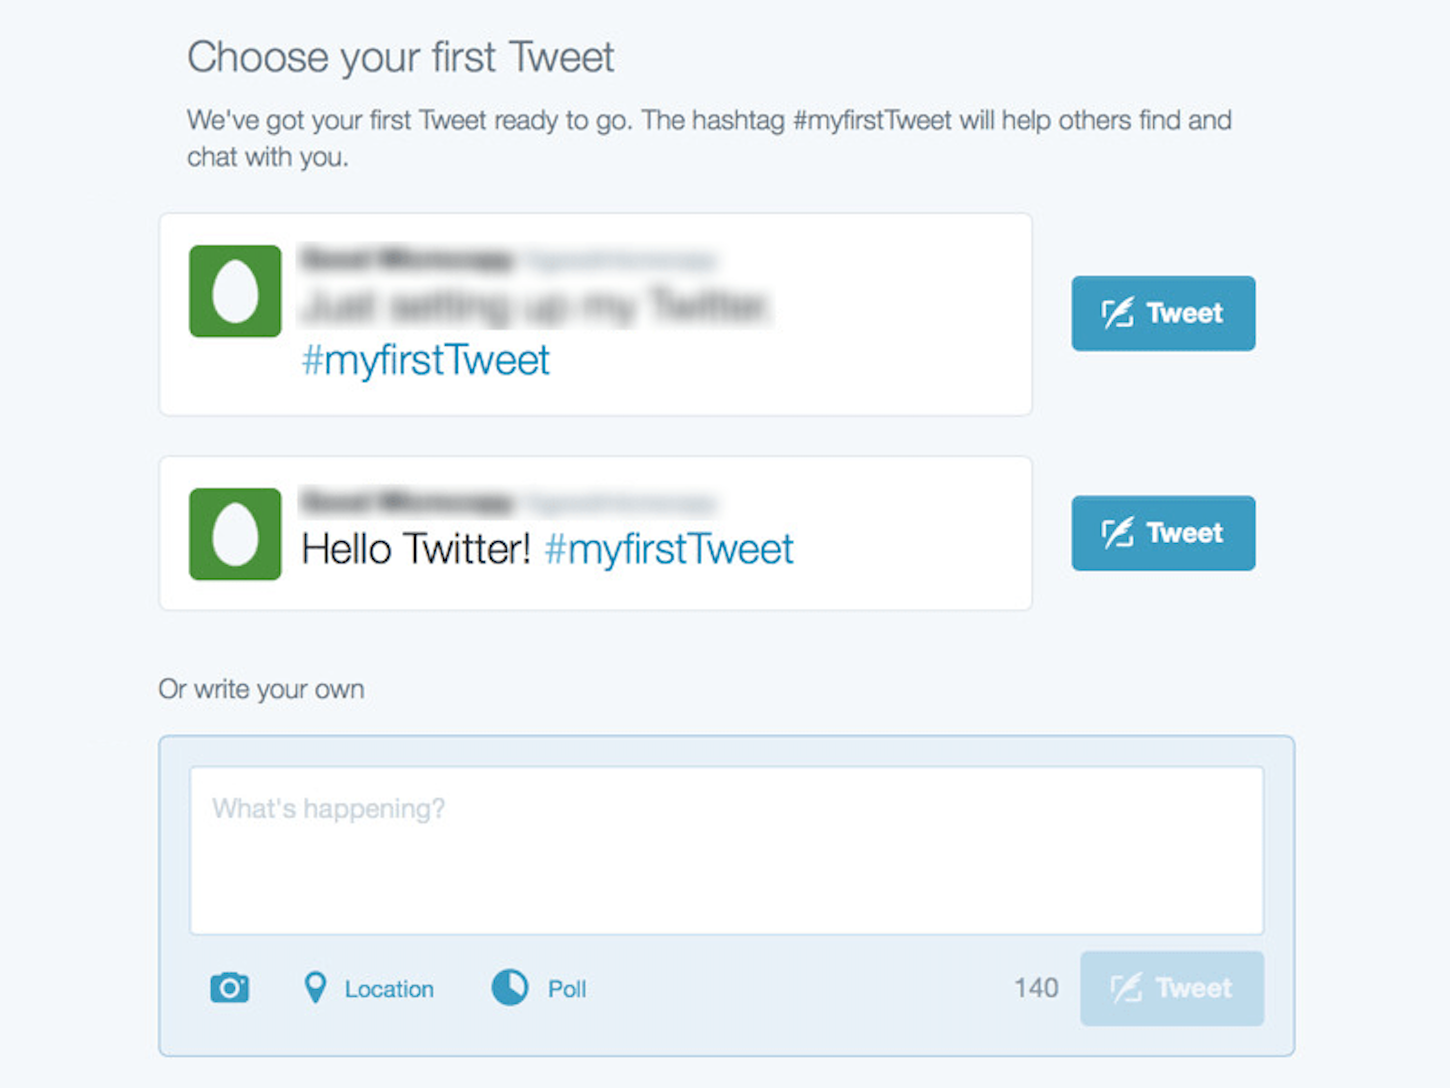 microcopy: screenshot of Twitter's original first tweet sample copy and hashtags